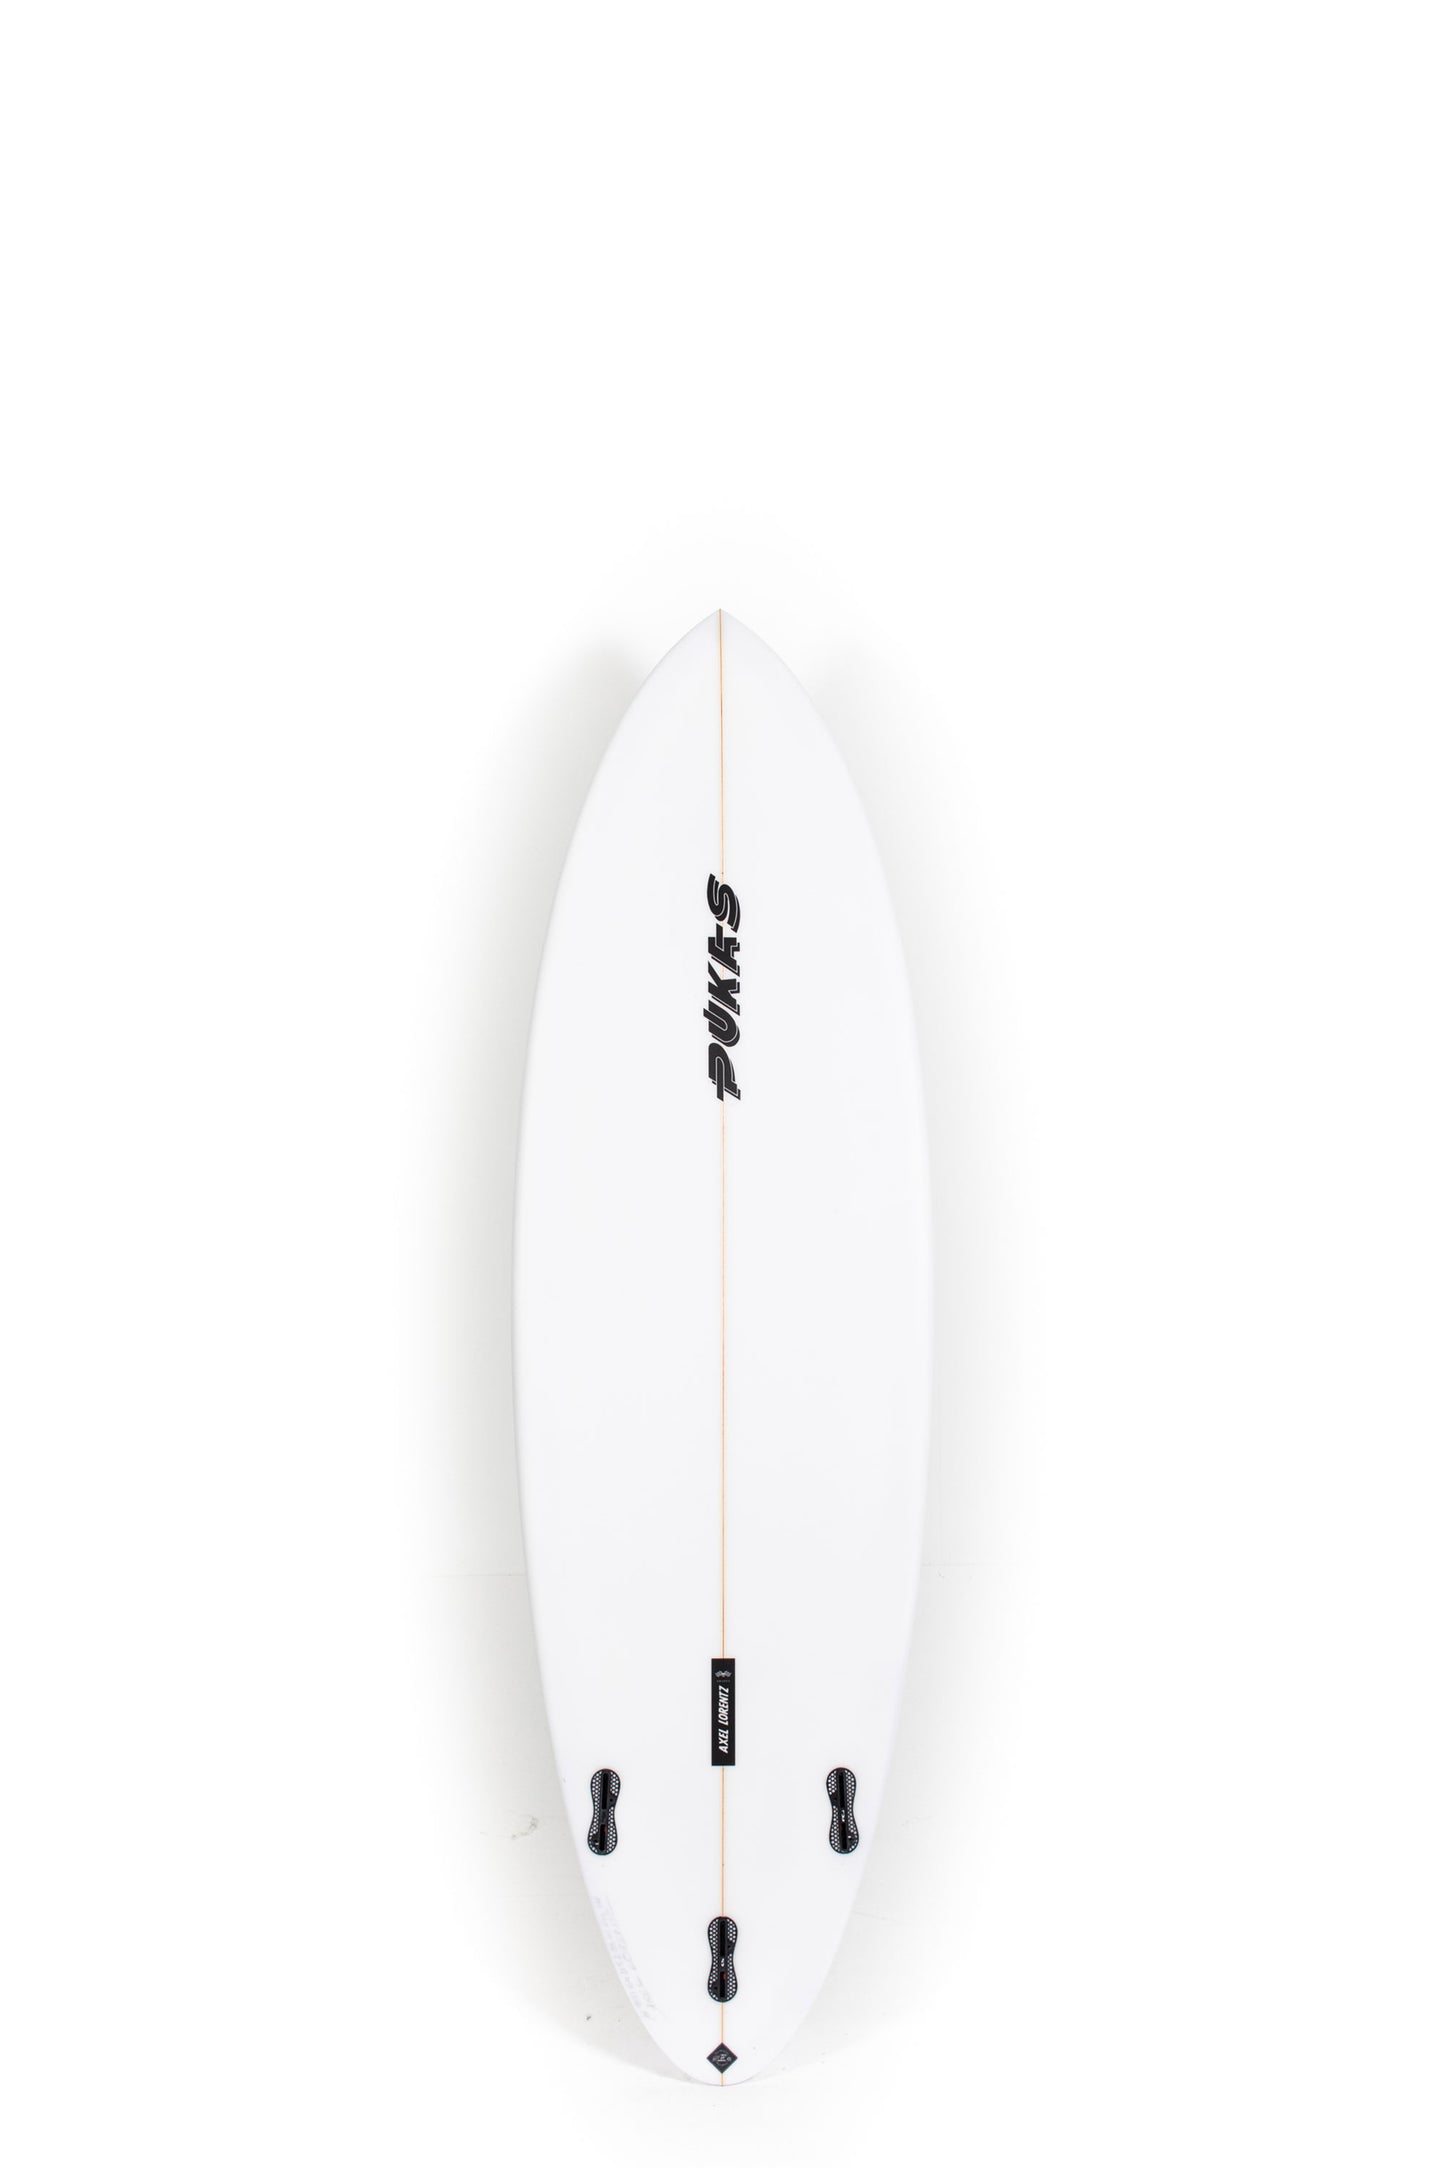 Pukas Surf Shop - Pukas Surfboard - ORIGINAL 69 by Axel Lorentz - 6’4” x 21,50 x 2,88 - 42,69L - AX09871